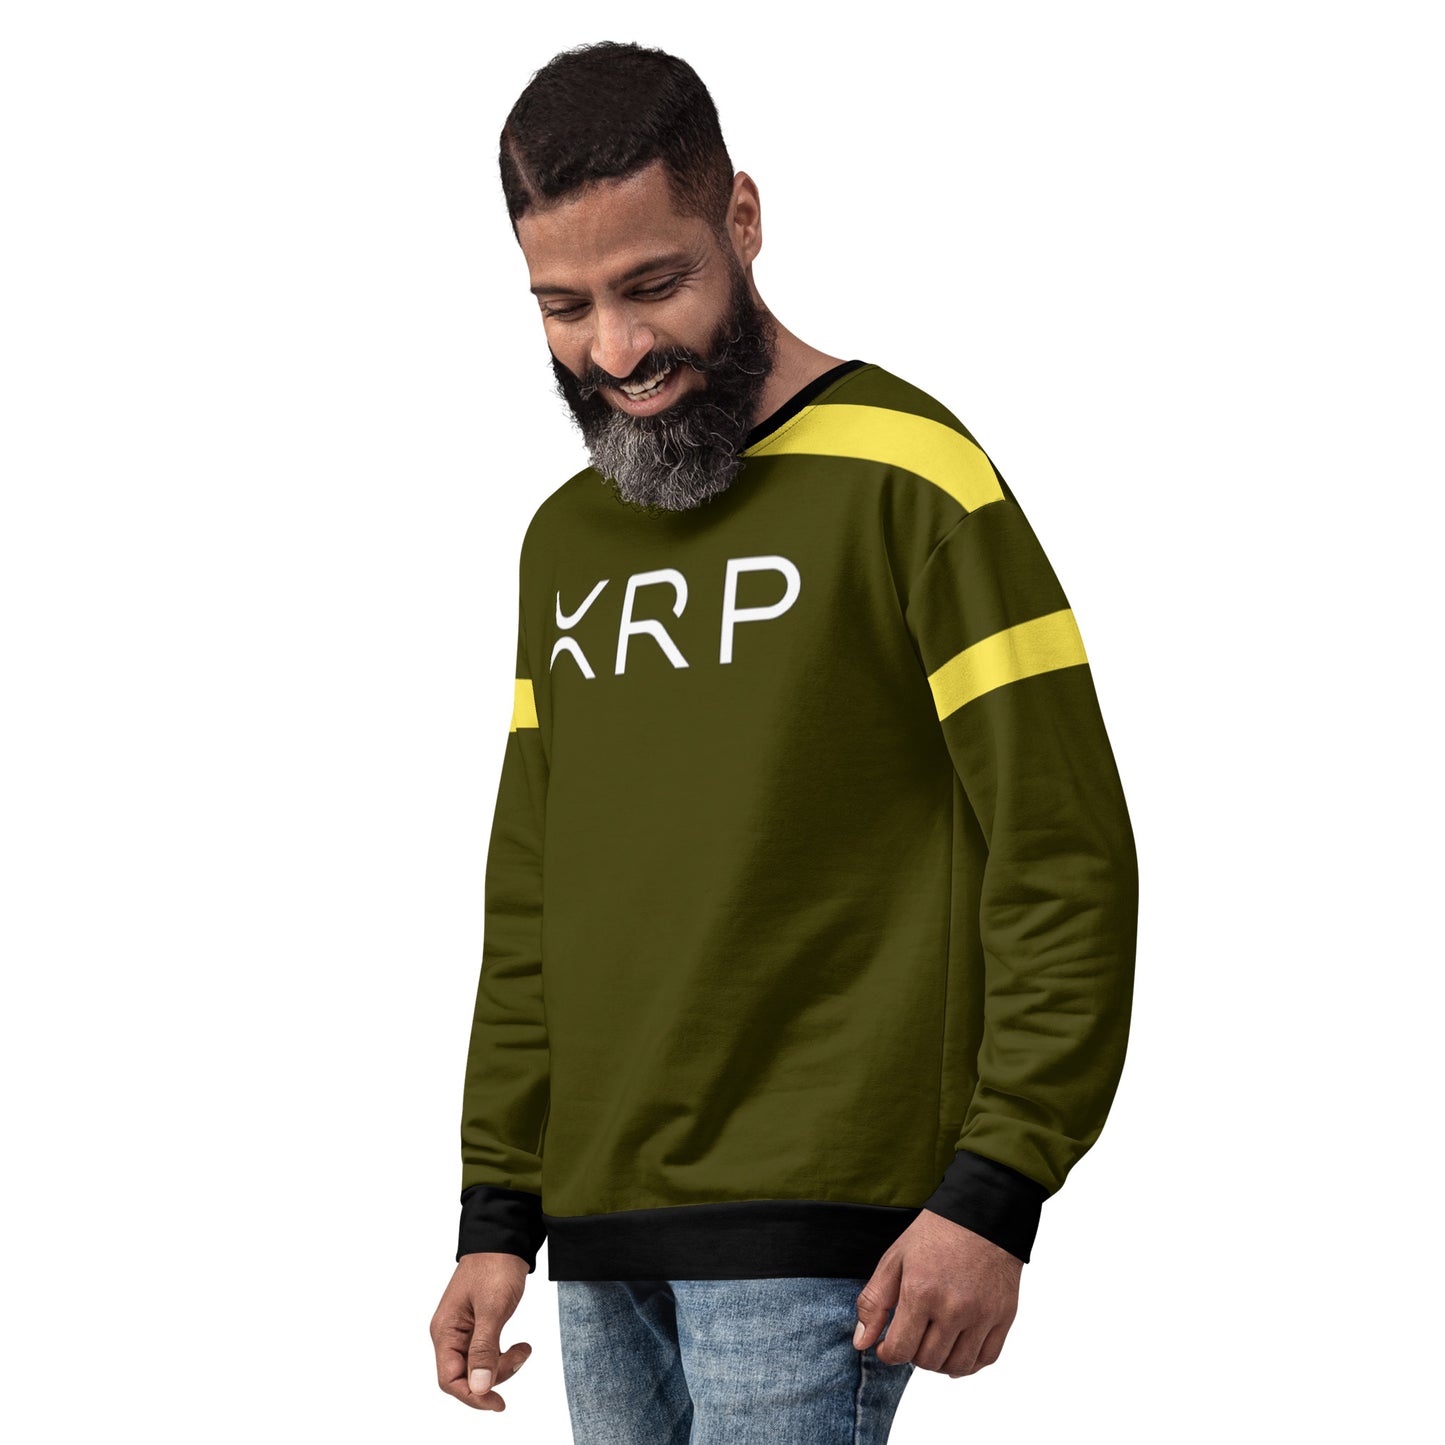 Xrp Armored Sweatshirt